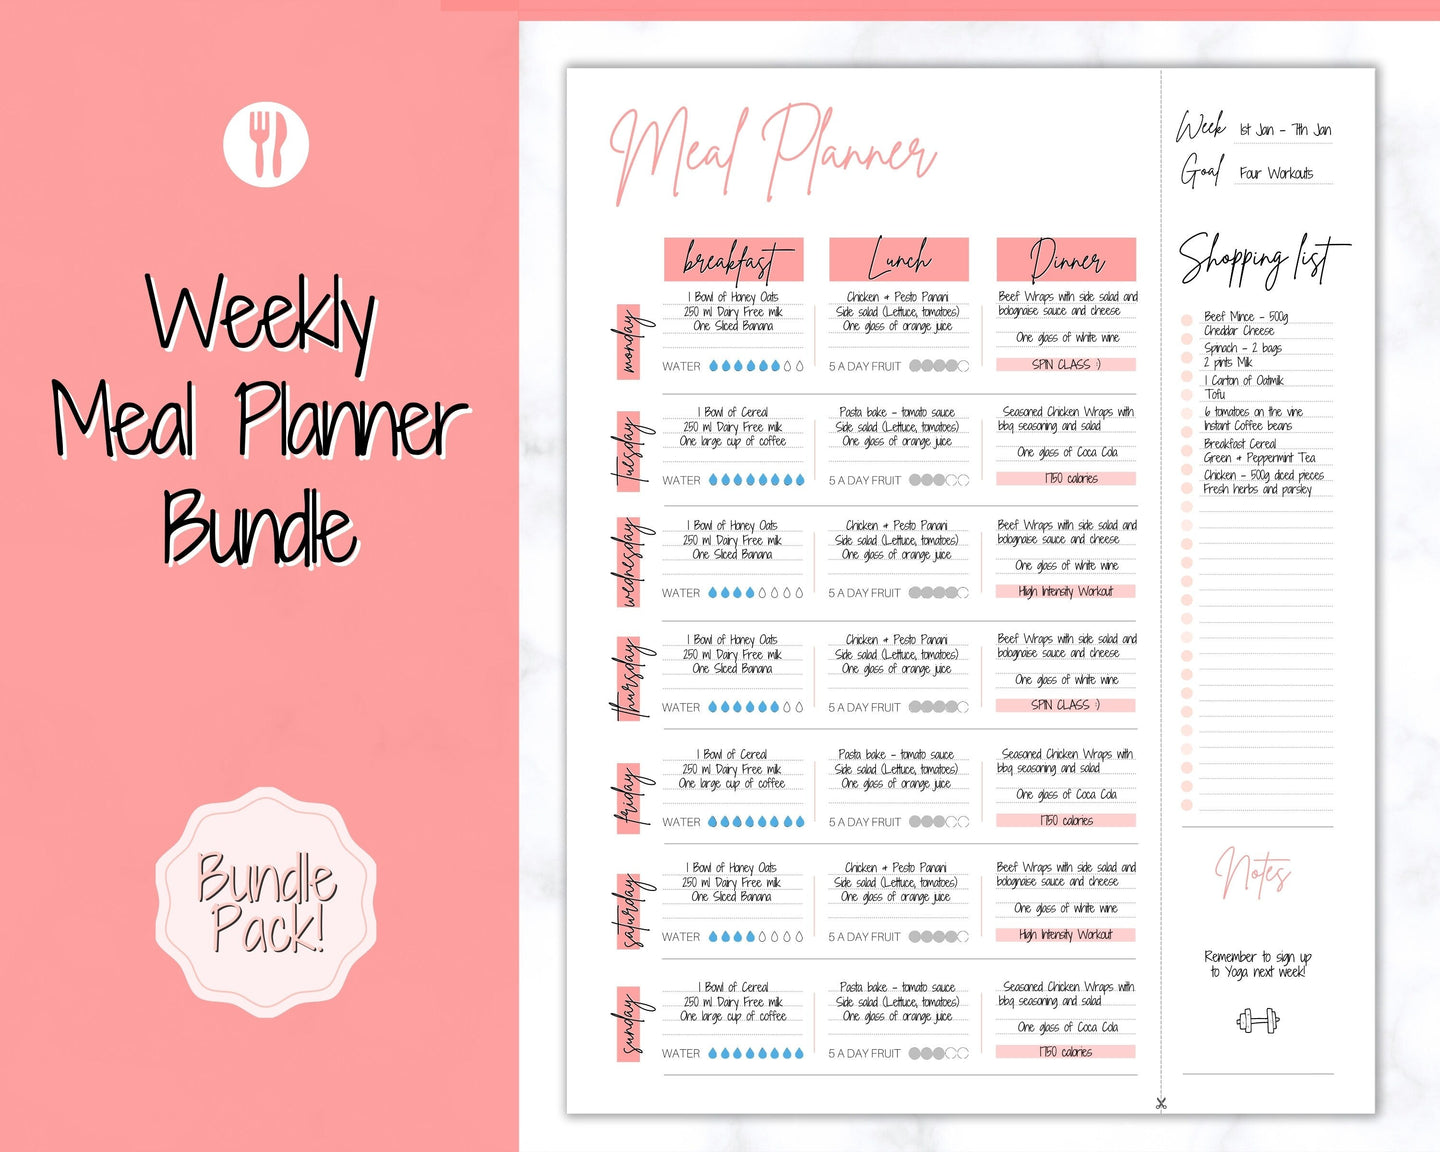 MEAL PLANNER Printable, Weekly Food Diary, Meal Tracker, Food Journal, Menu Plan & Prep, Grocery List! Diet, Fitness, Health | Pink Colorful